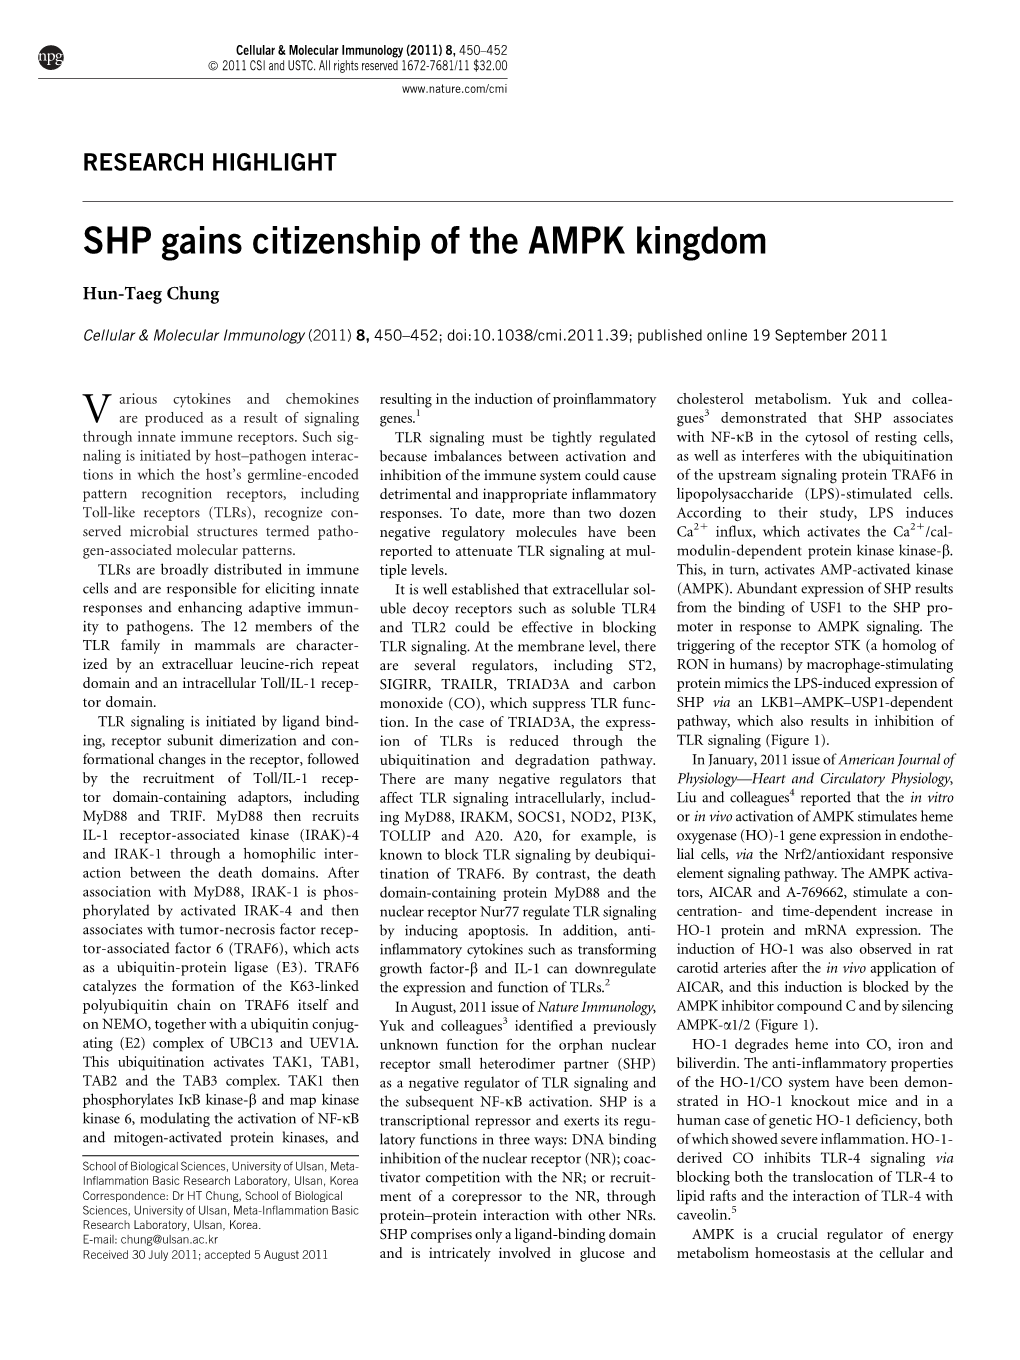 SHP Gains Citizenship of the AMPK Kingdom